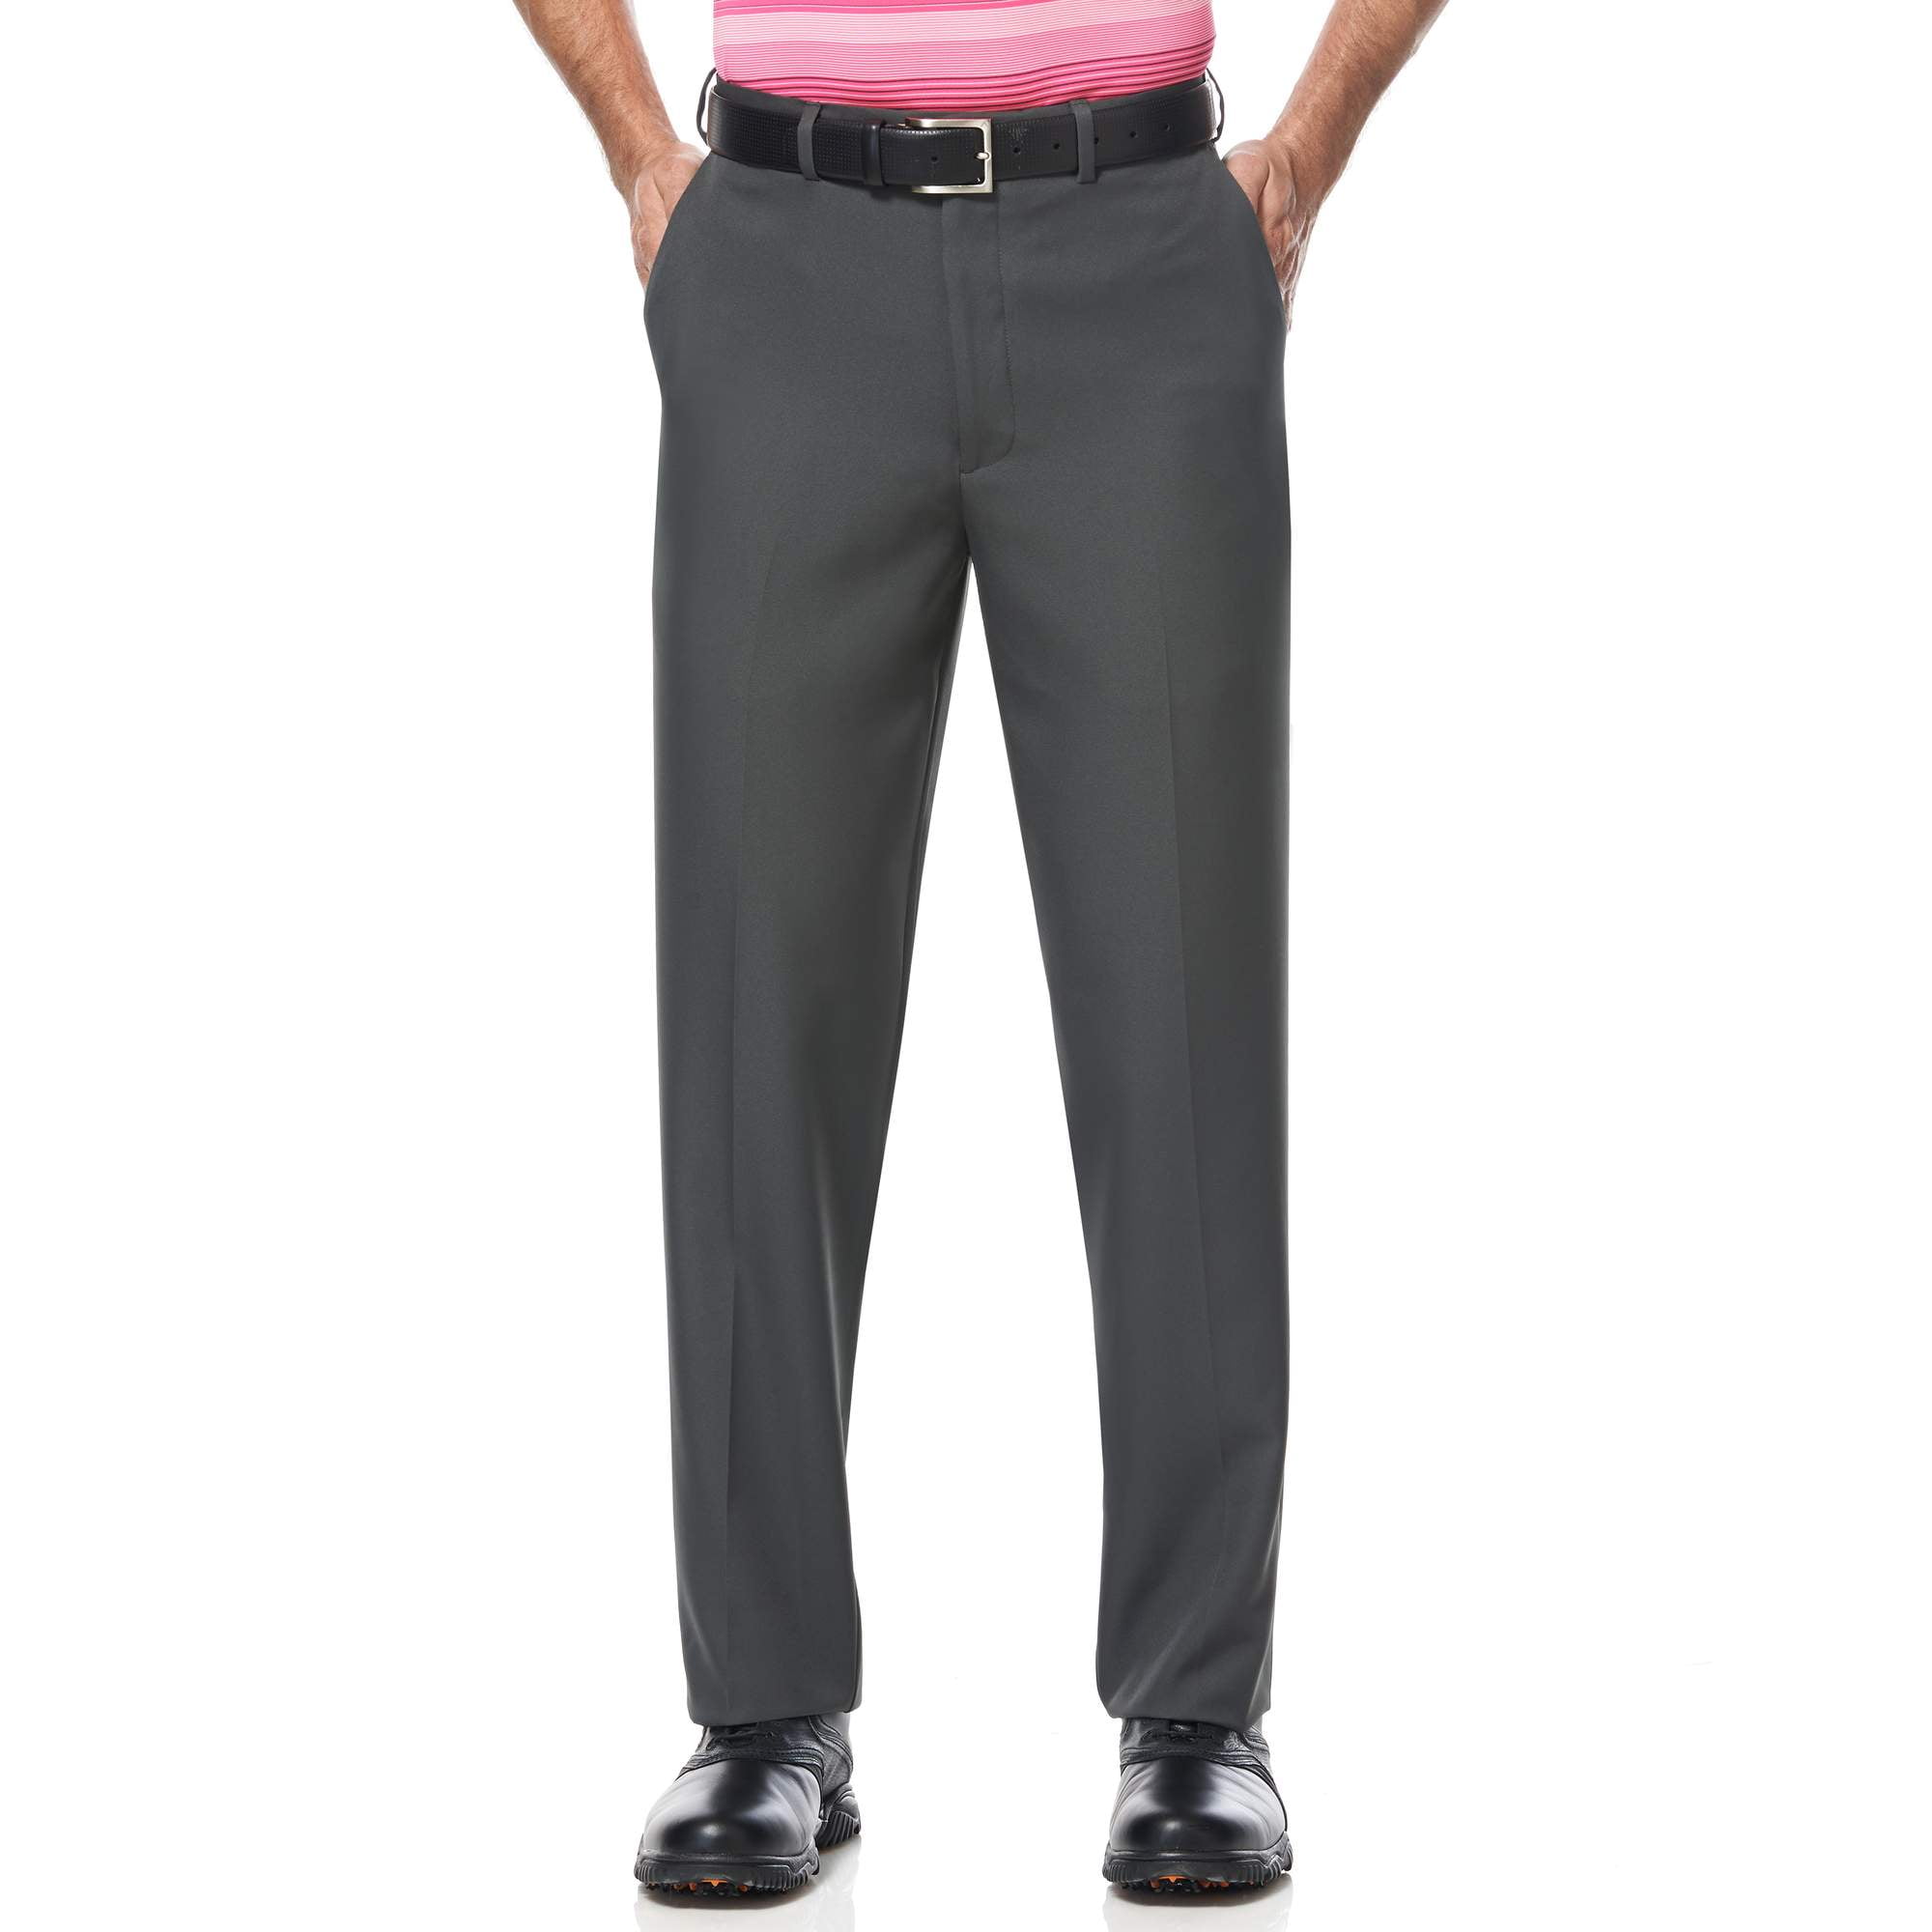 Men's Flat Front Golf Pants with Expandable Waistband - Walmart.com